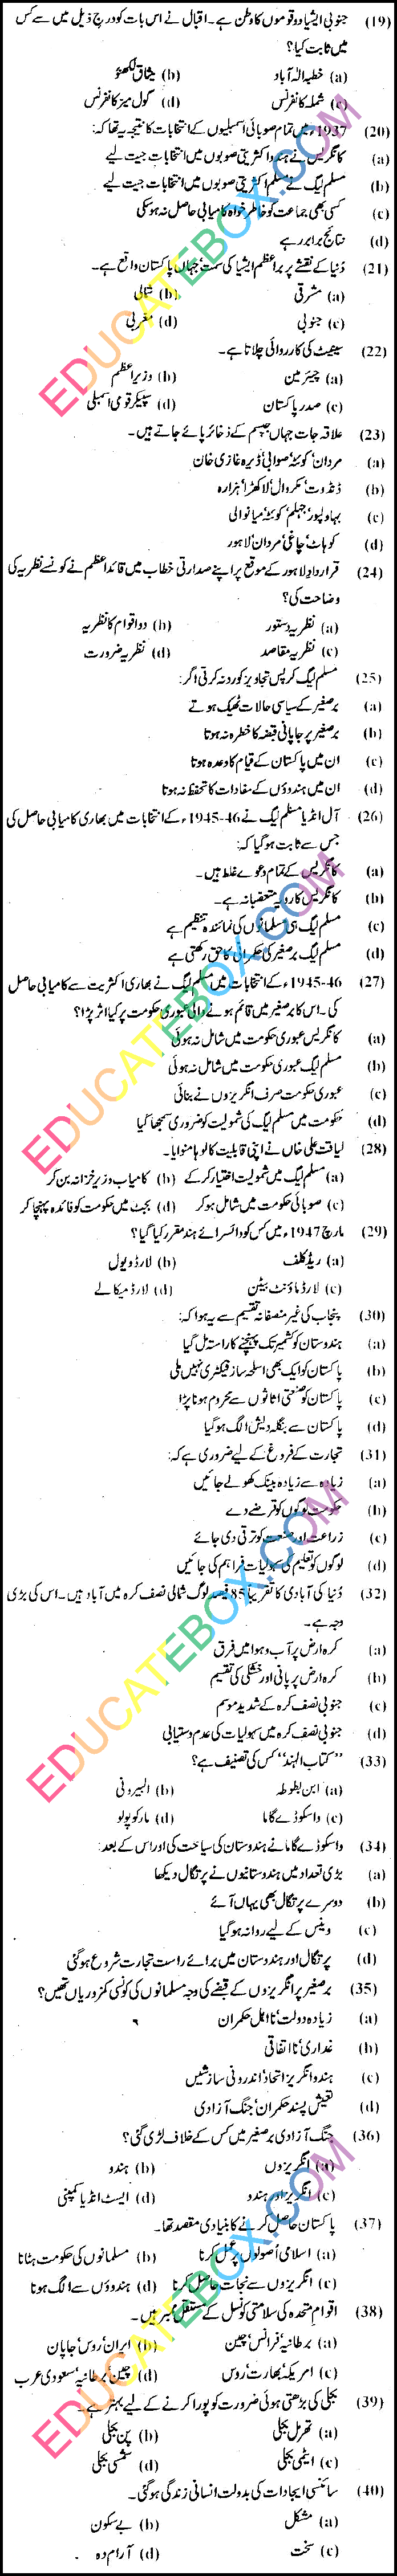 Past Paper 8th Class Social Studies (Urdu Medium) Punjab Board (PEC) 2011 Objective Type Page 2 . پرچہ معاشرتی علوم 2011 جماعت ہشتم پنجاب بورڈ اردو میڈیم ۔ معروضی